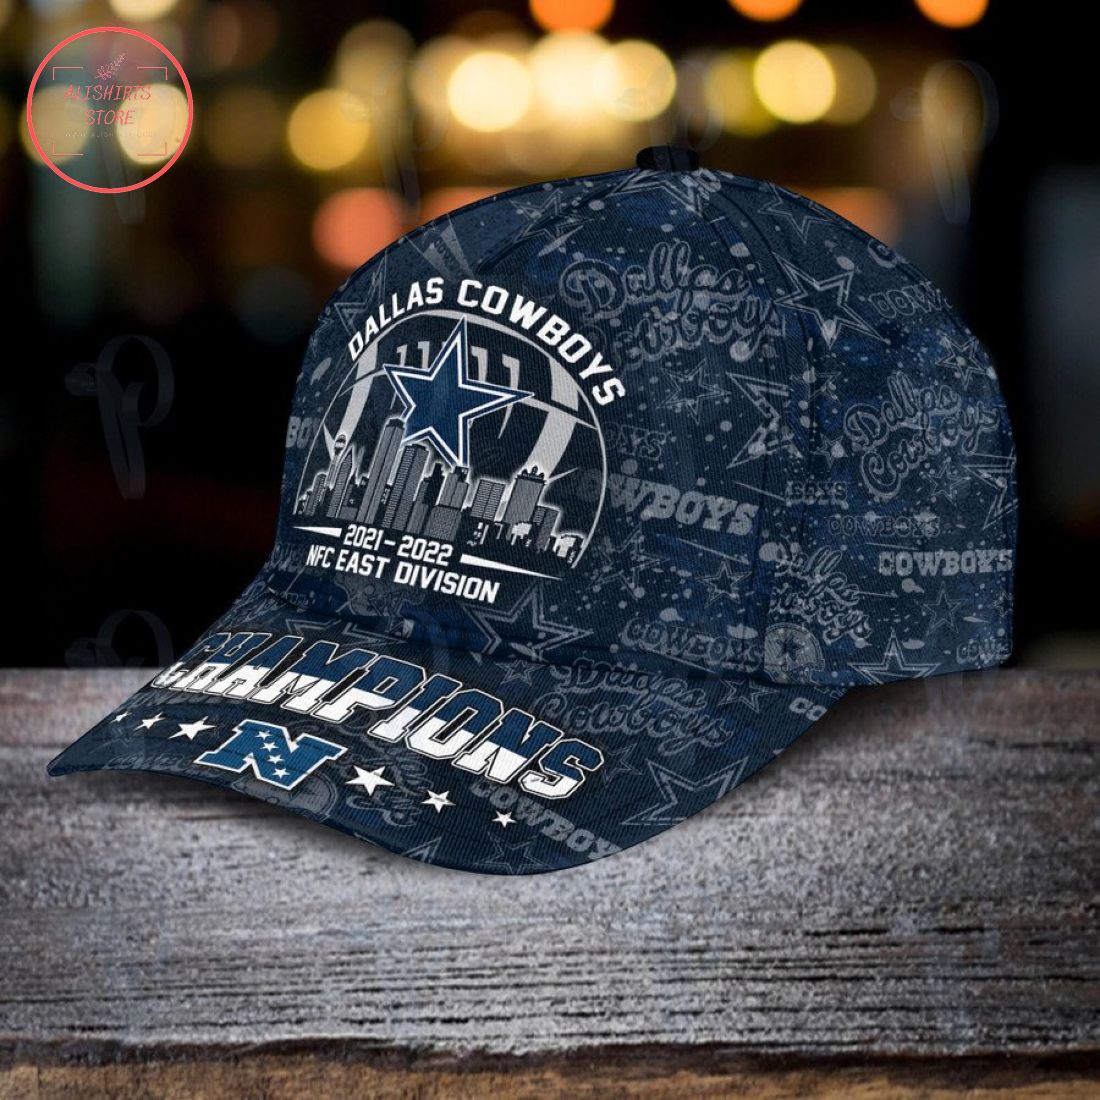 Nfl Dallas Cowboys 2021 2022 Nfc East Division Champions Hat Cap